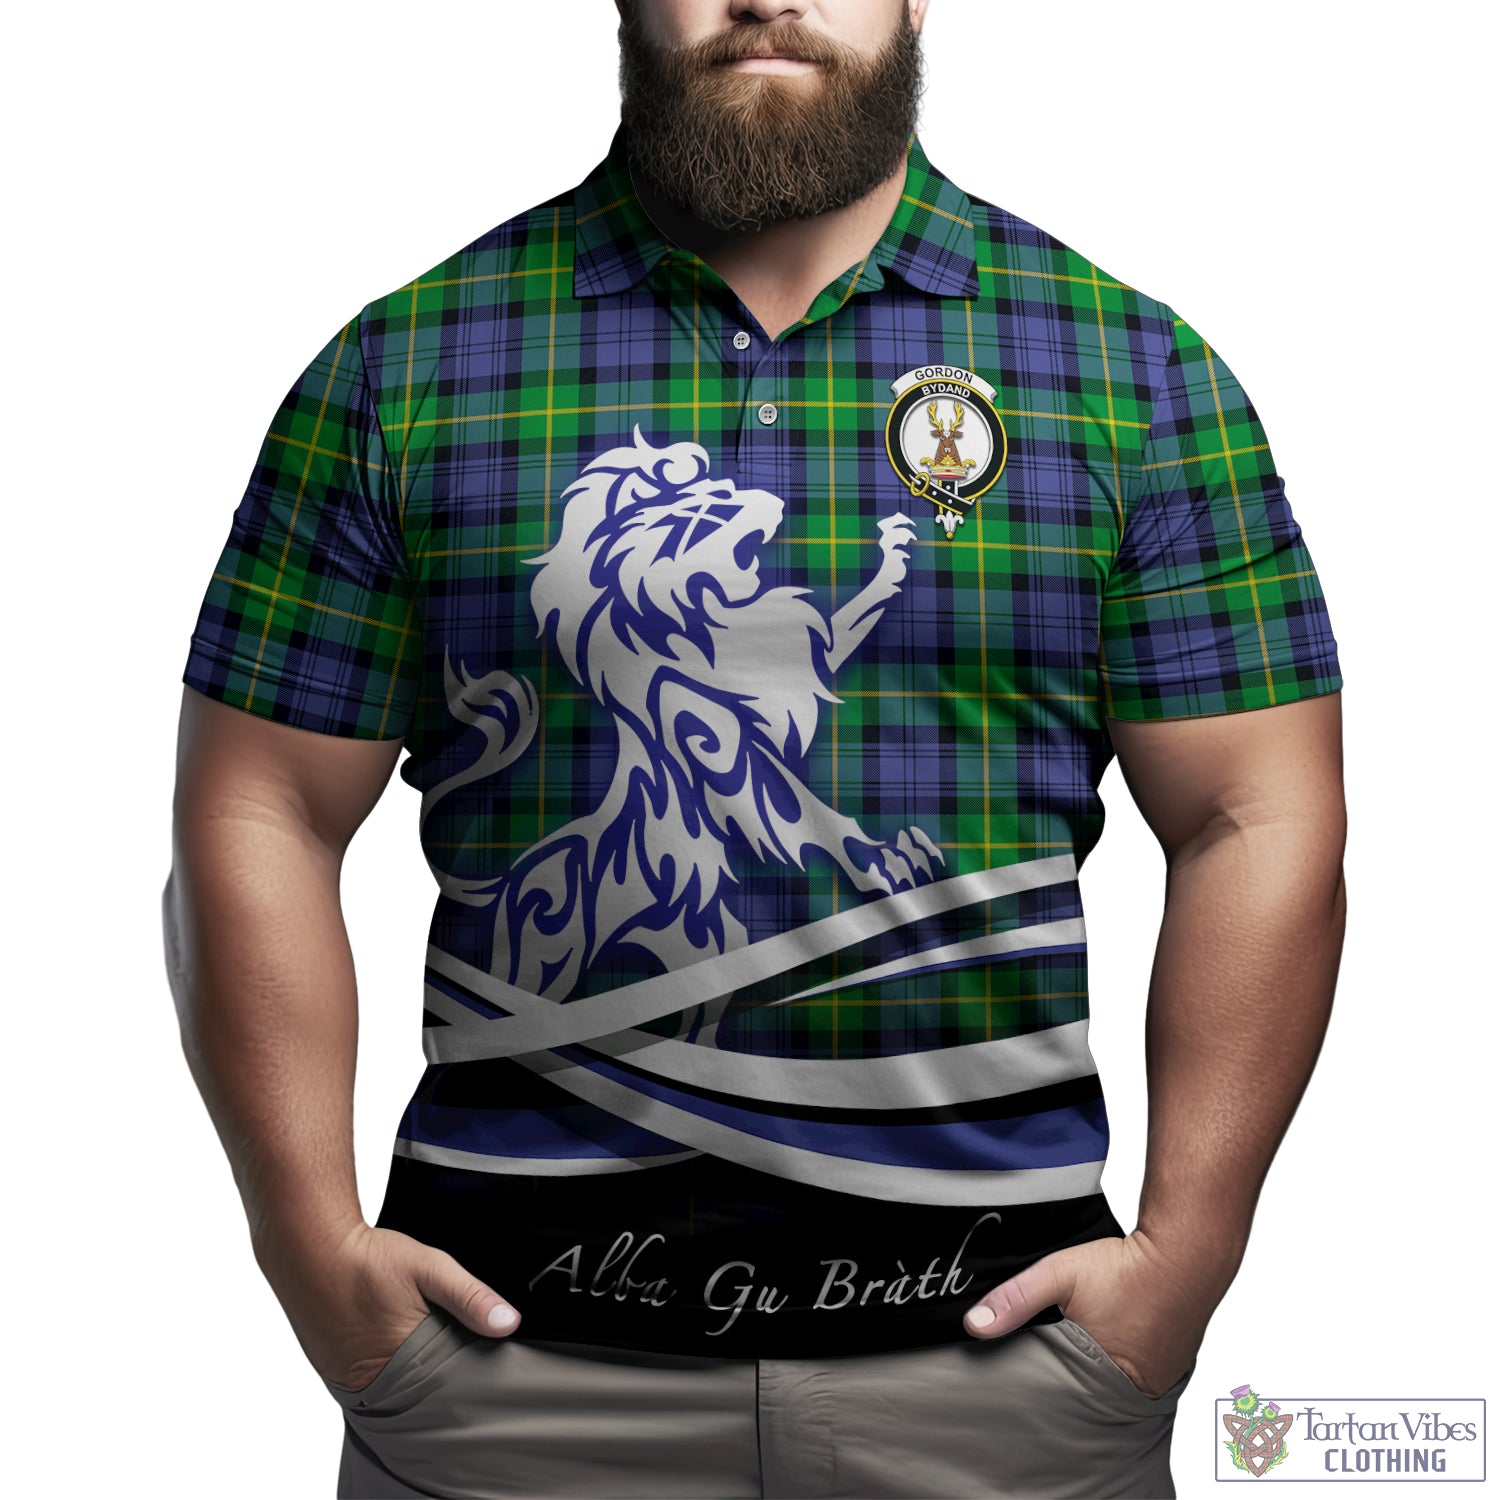 gordon-modern-tartan-polo-shirt-with-alba-gu-brath-regal-lion-emblem